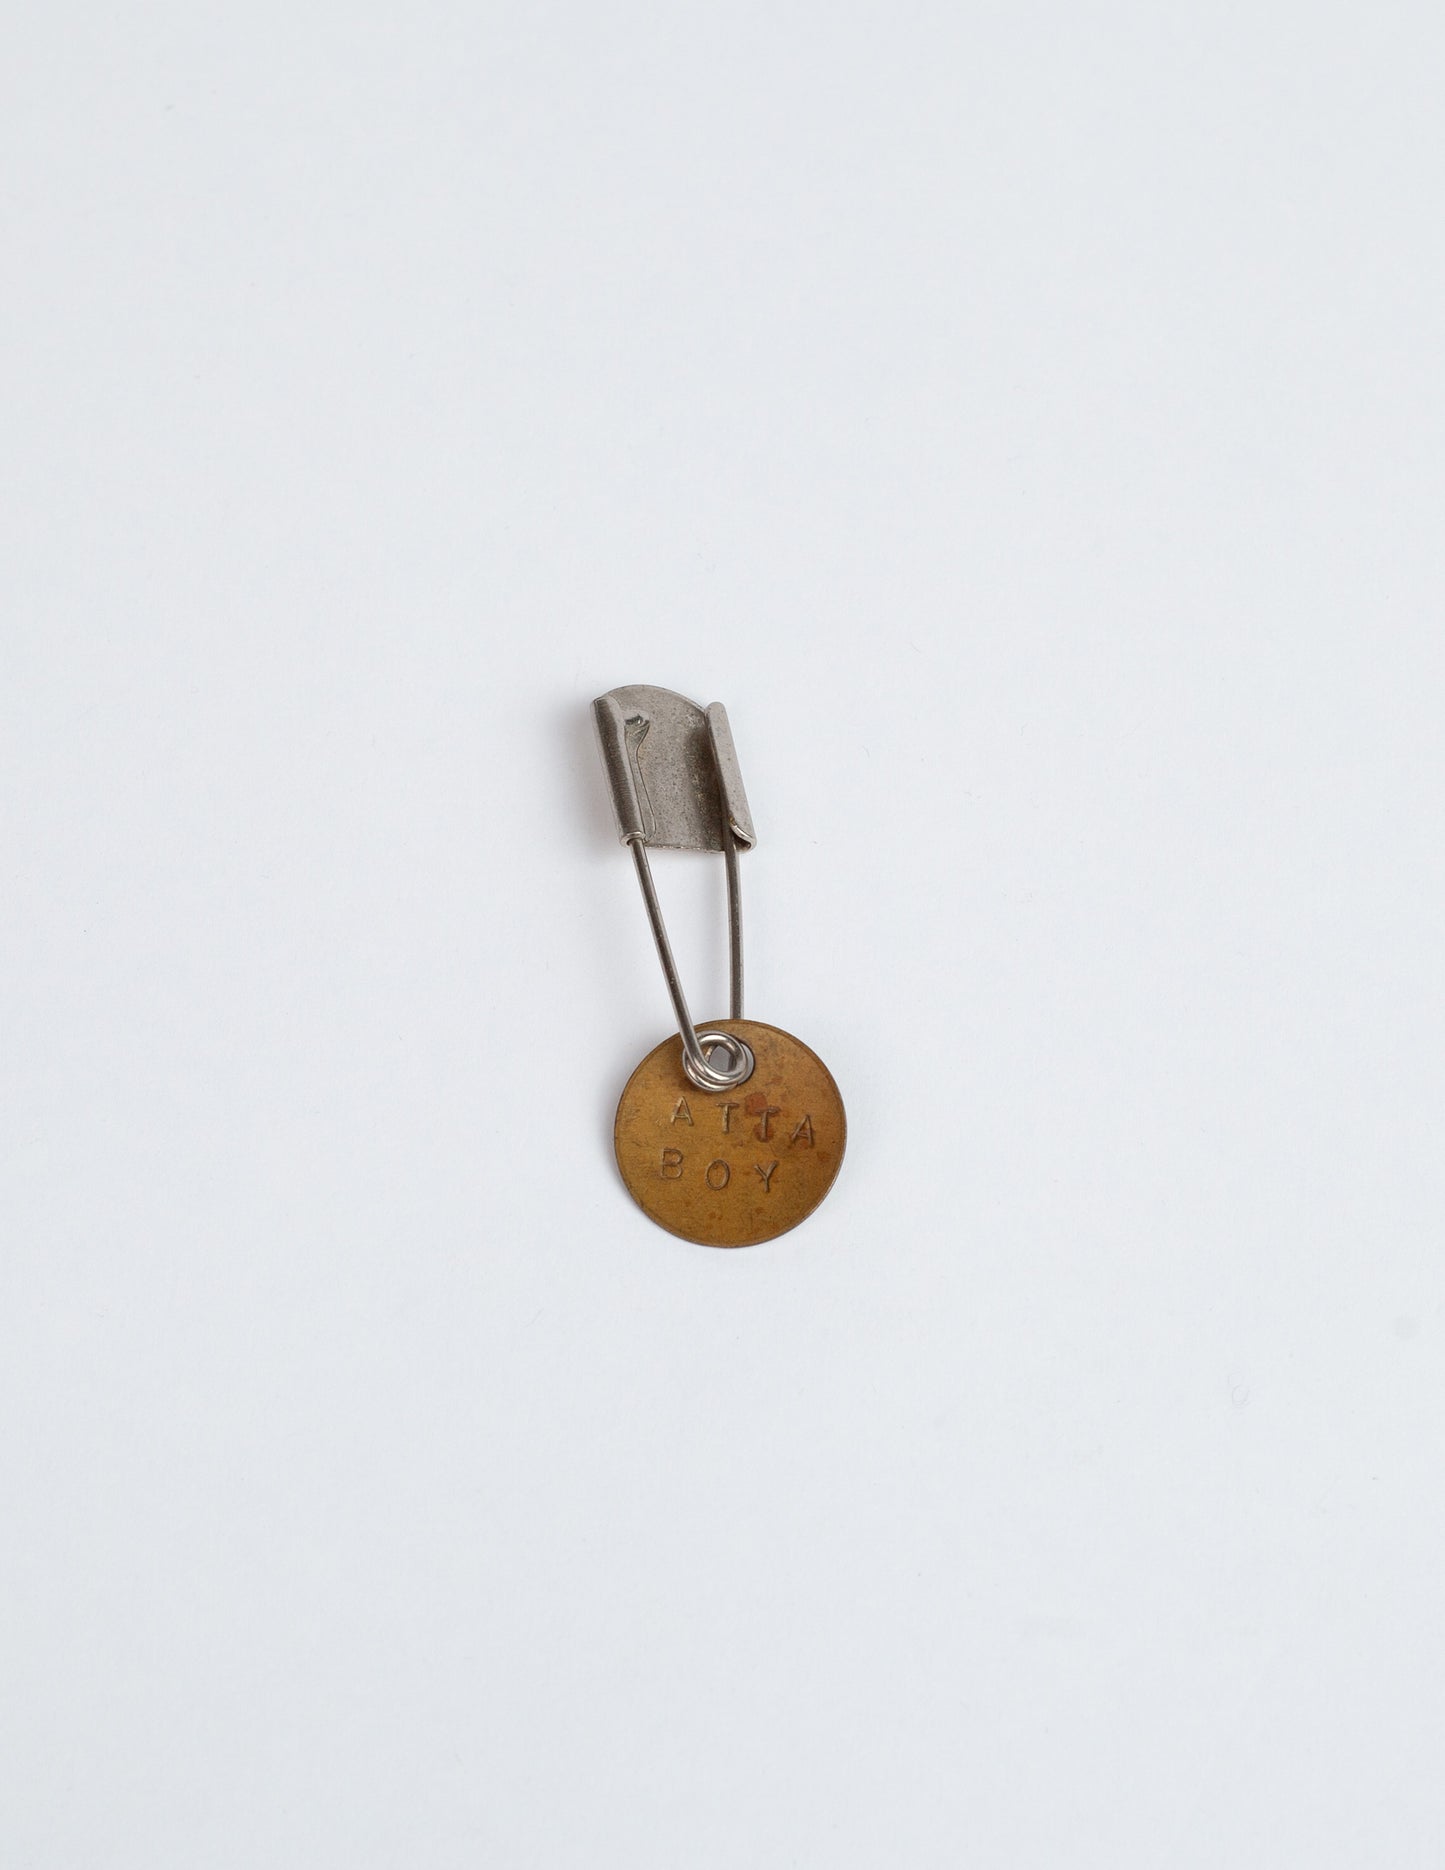 Rivay Vintage Atta Boy keychain safety pin